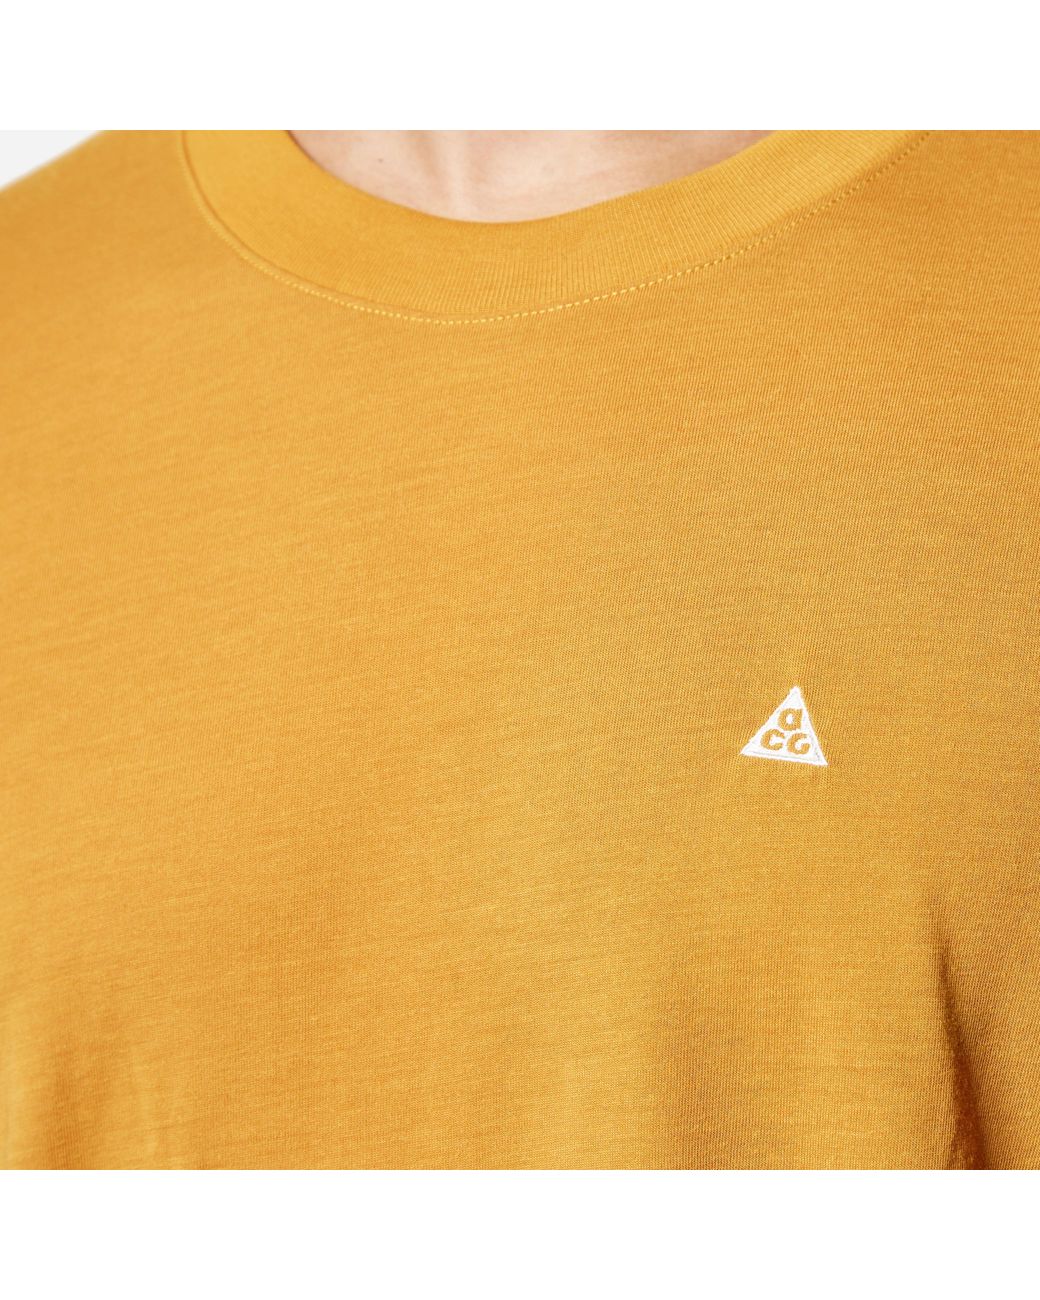 Nike Acg Goat Rocks Long Sleeve T-shirt in Metallic for Men | Lyst